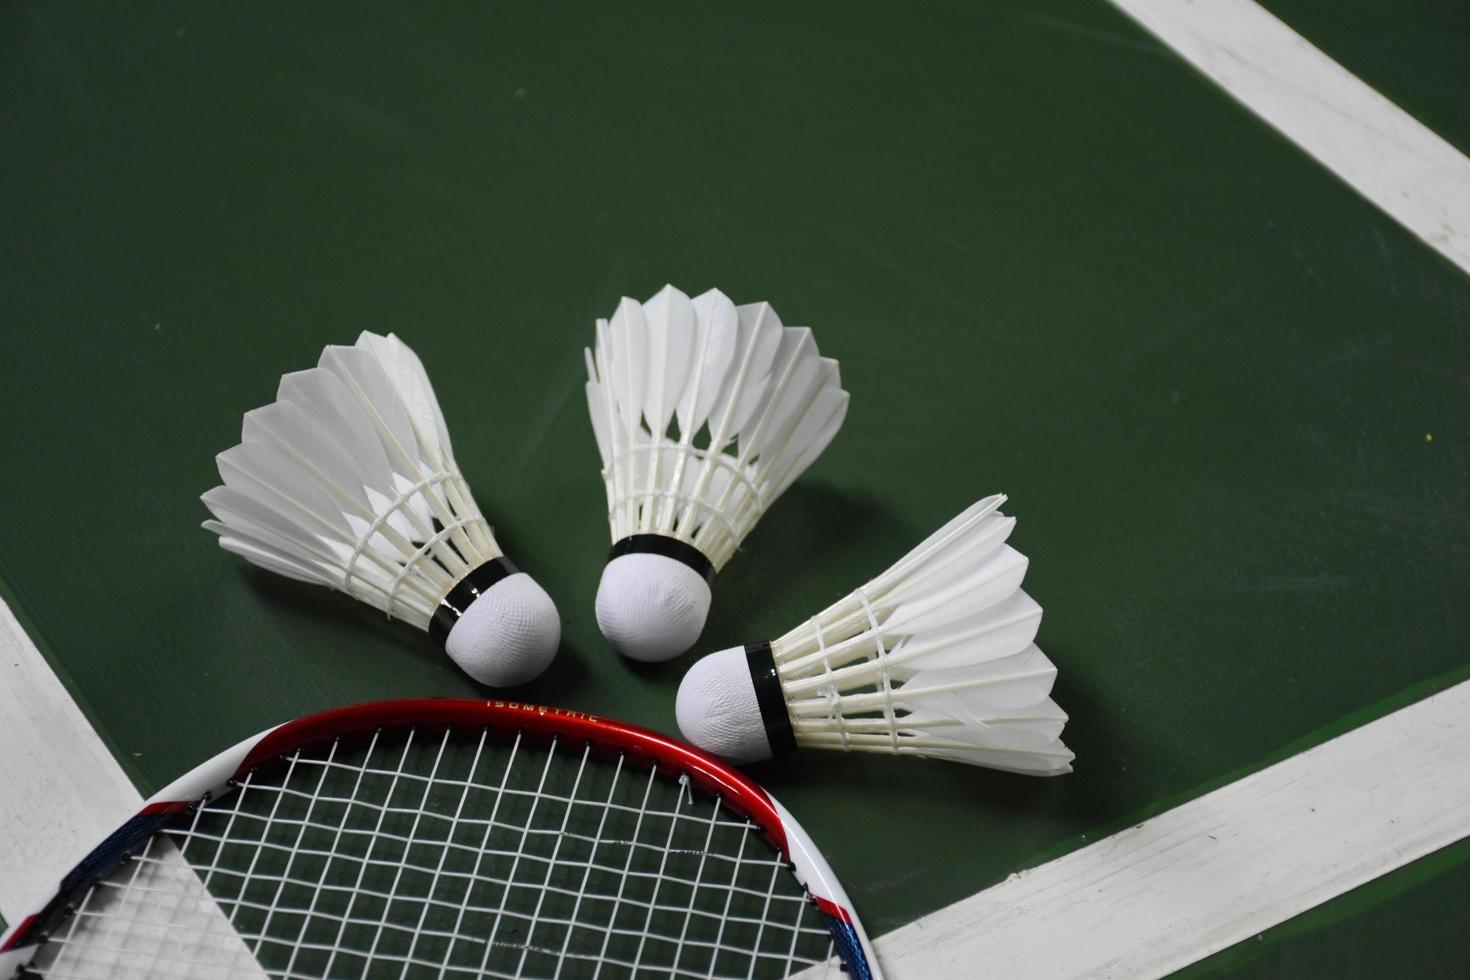 Badminton shuttlecock and racket for badminton sport. photo